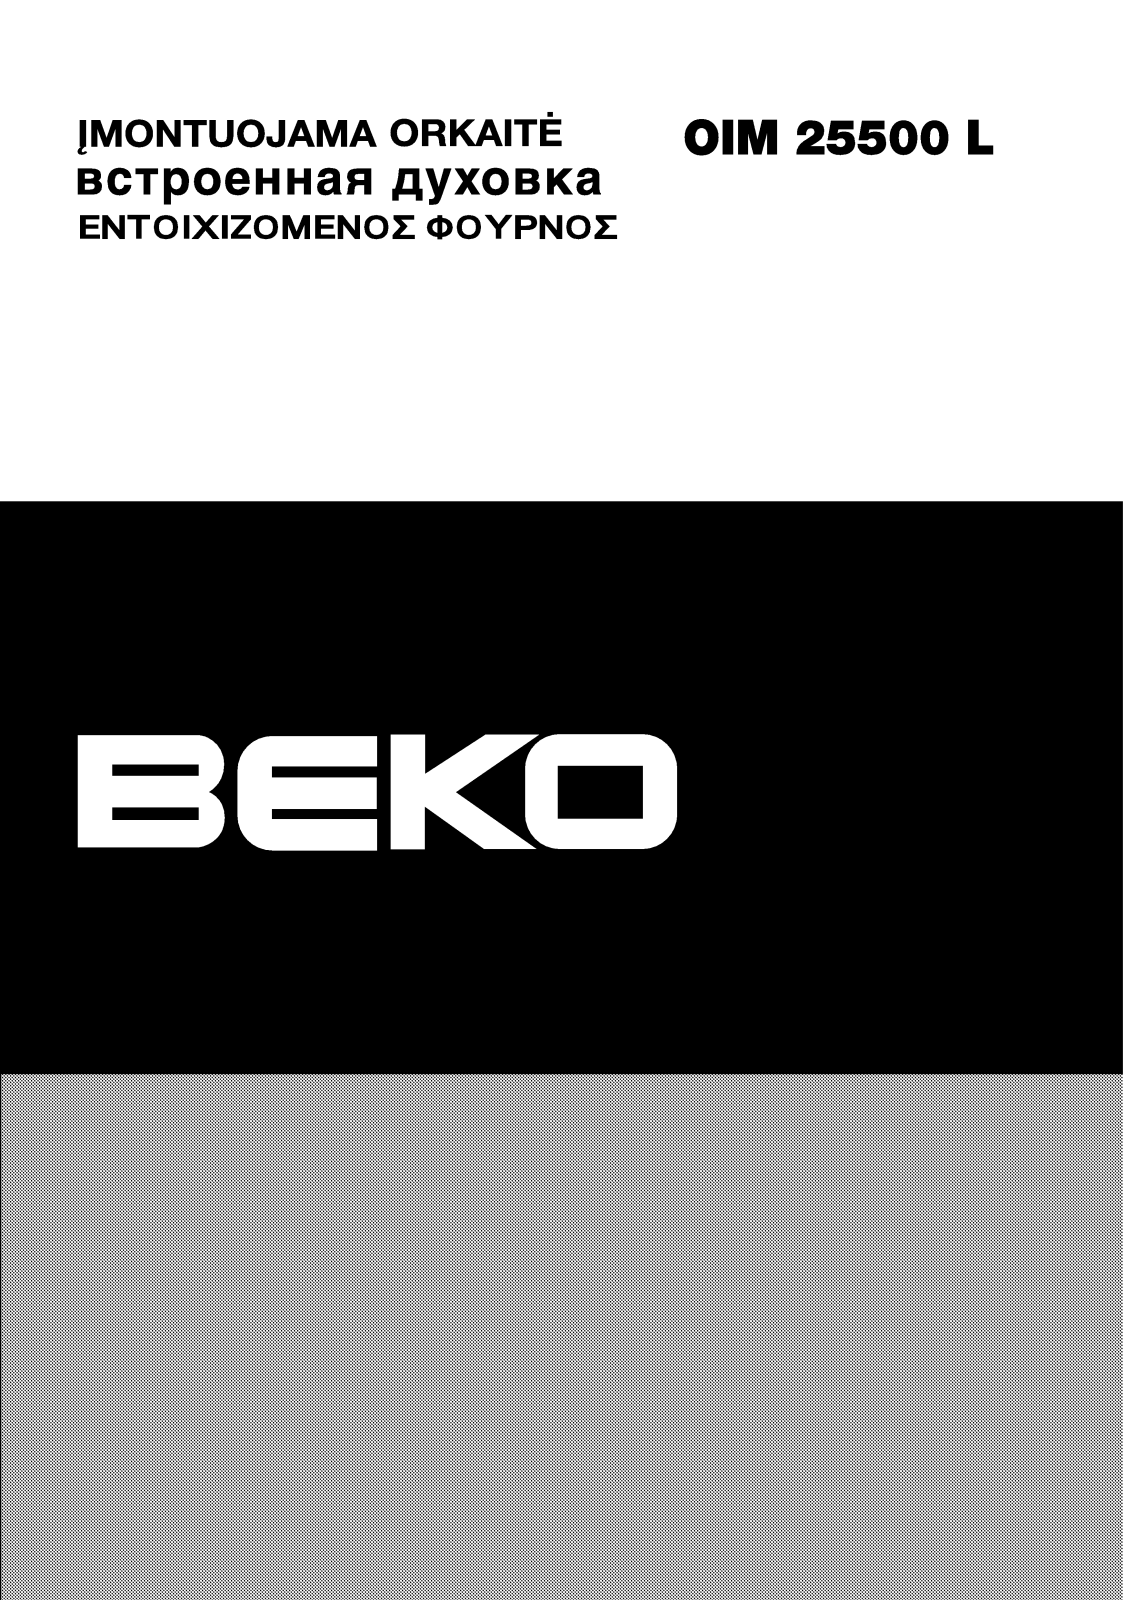 Beko OIM 25500 L Manual